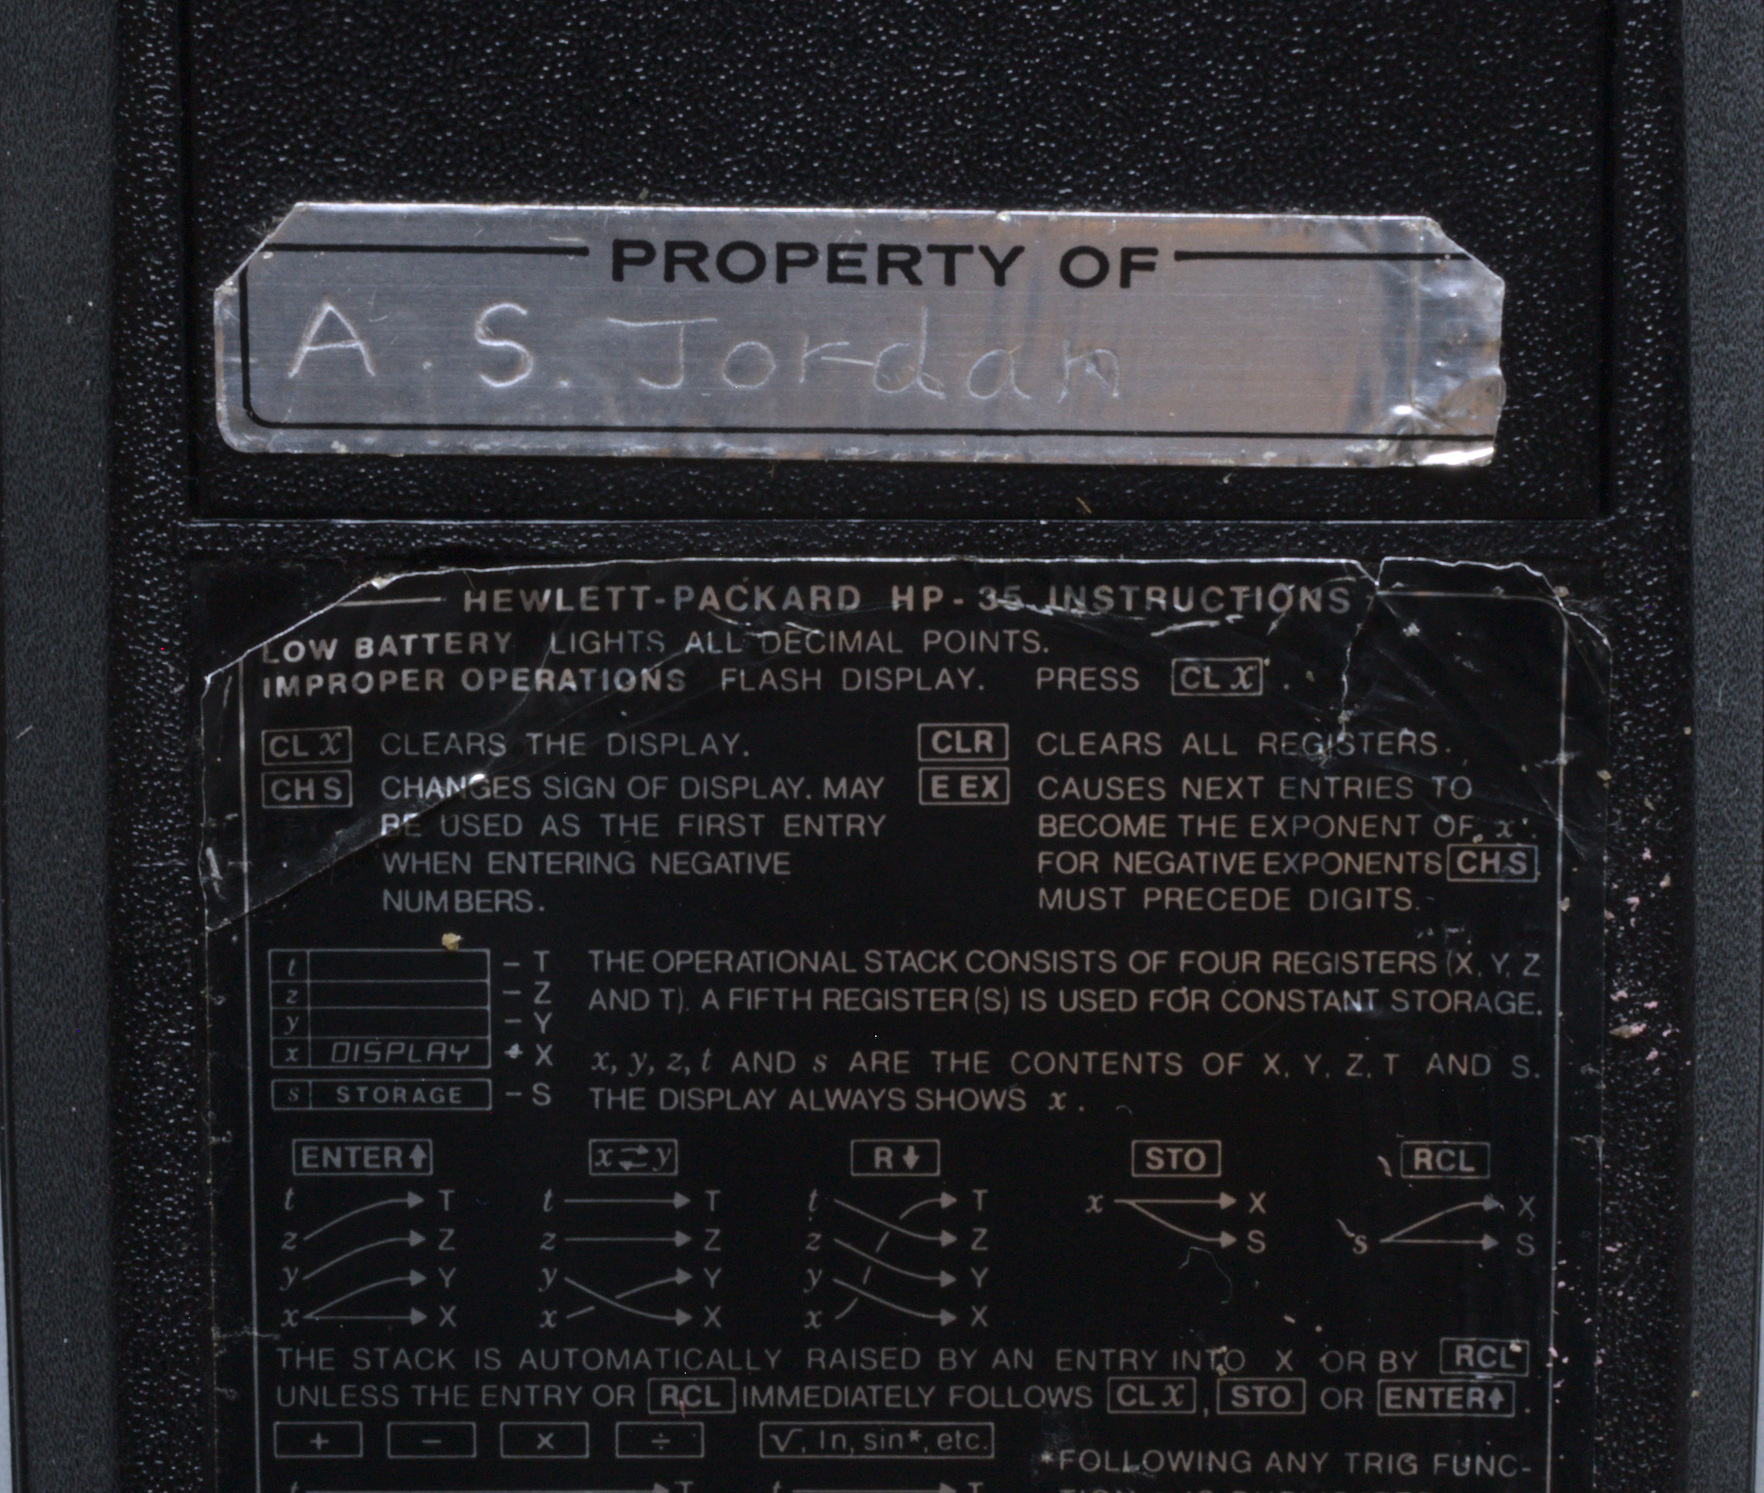 HP-35 property of ASJ